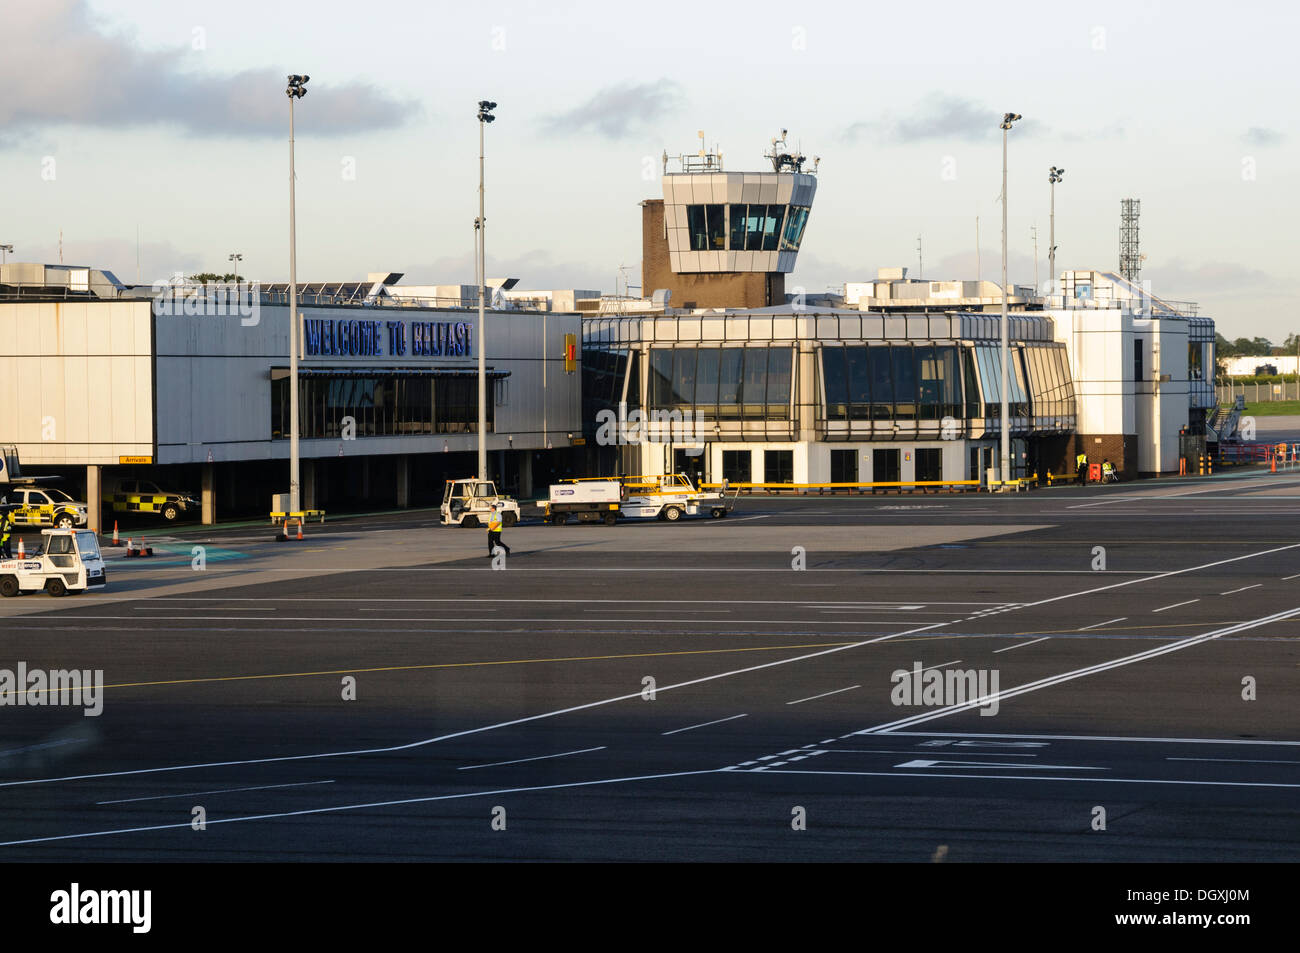 Belfast International Airport DGXJ0M 